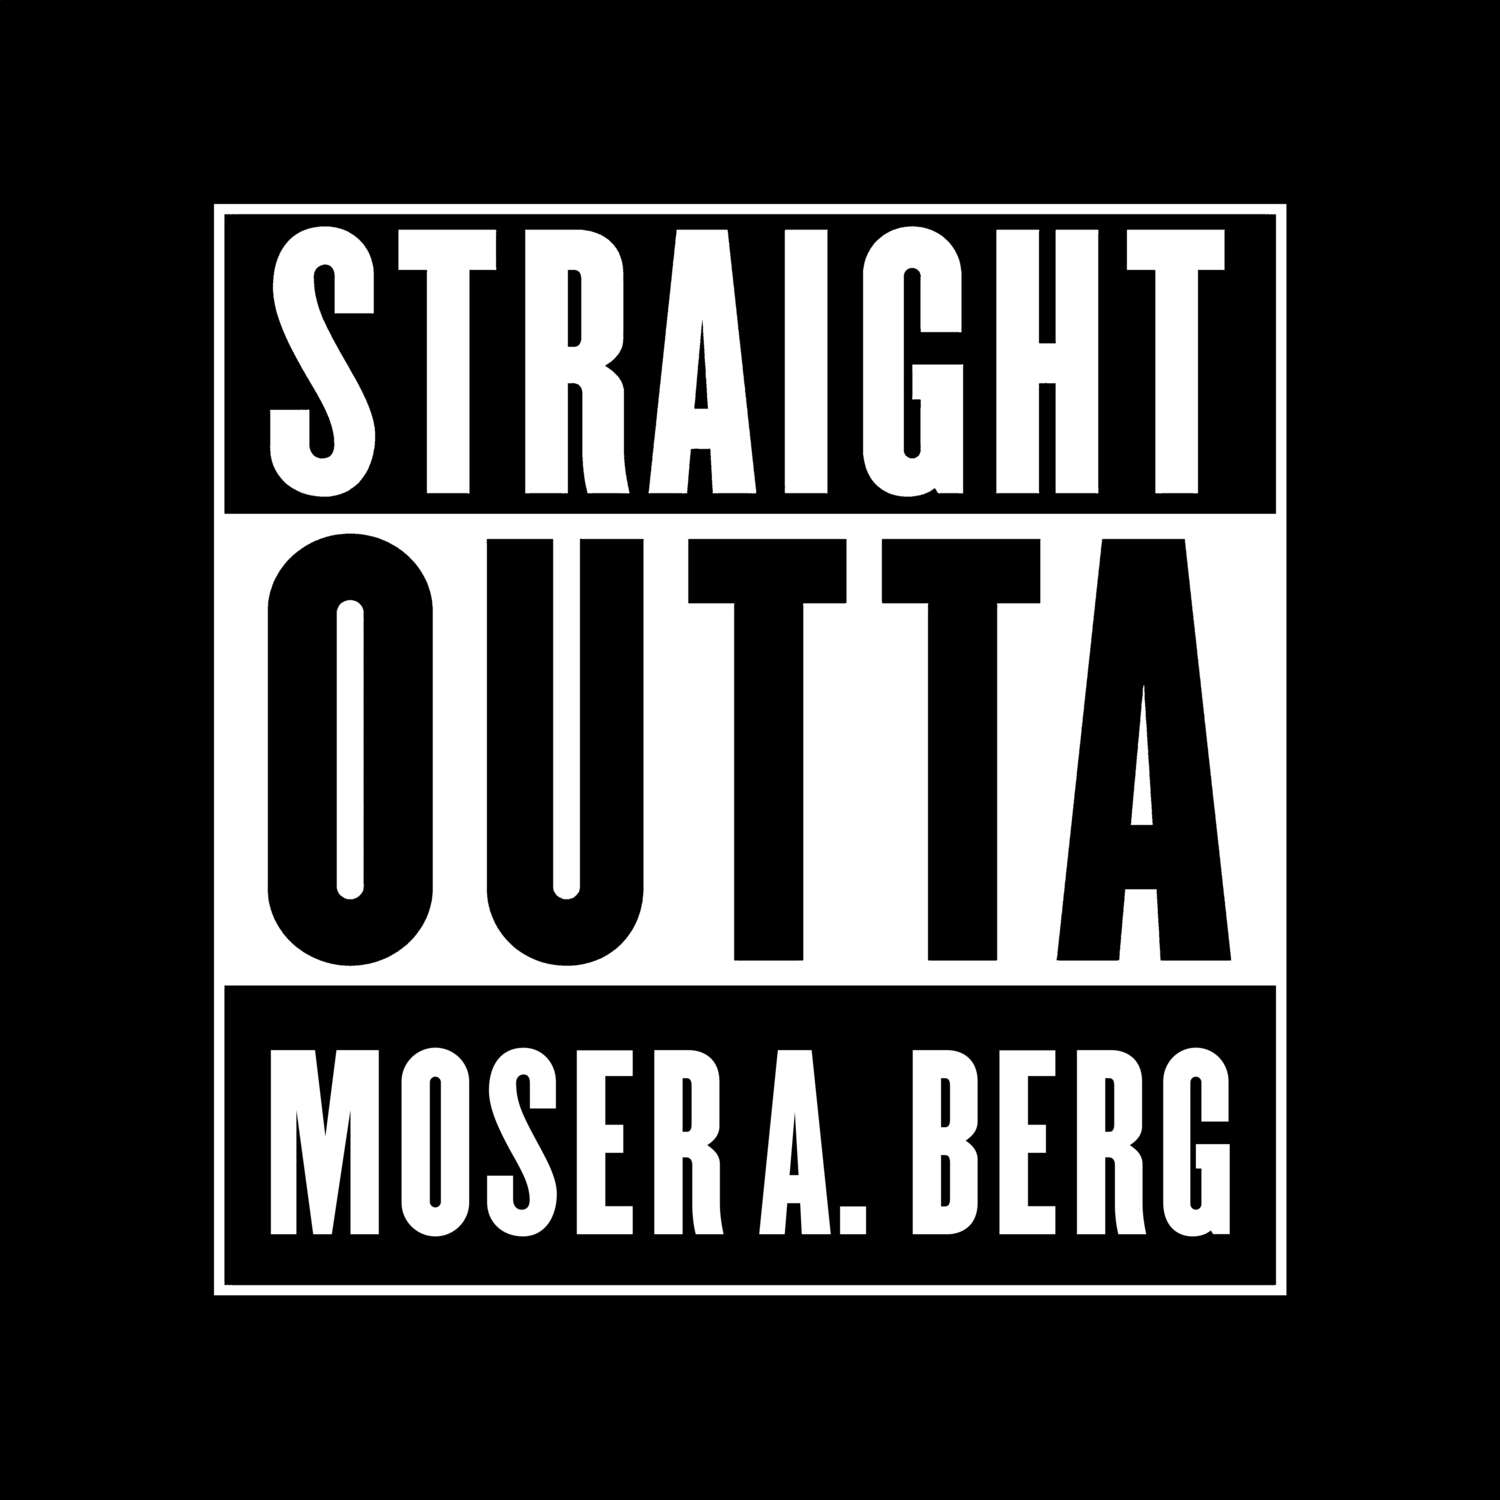 Moser a. Berg T-Shirt »Straight Outta«